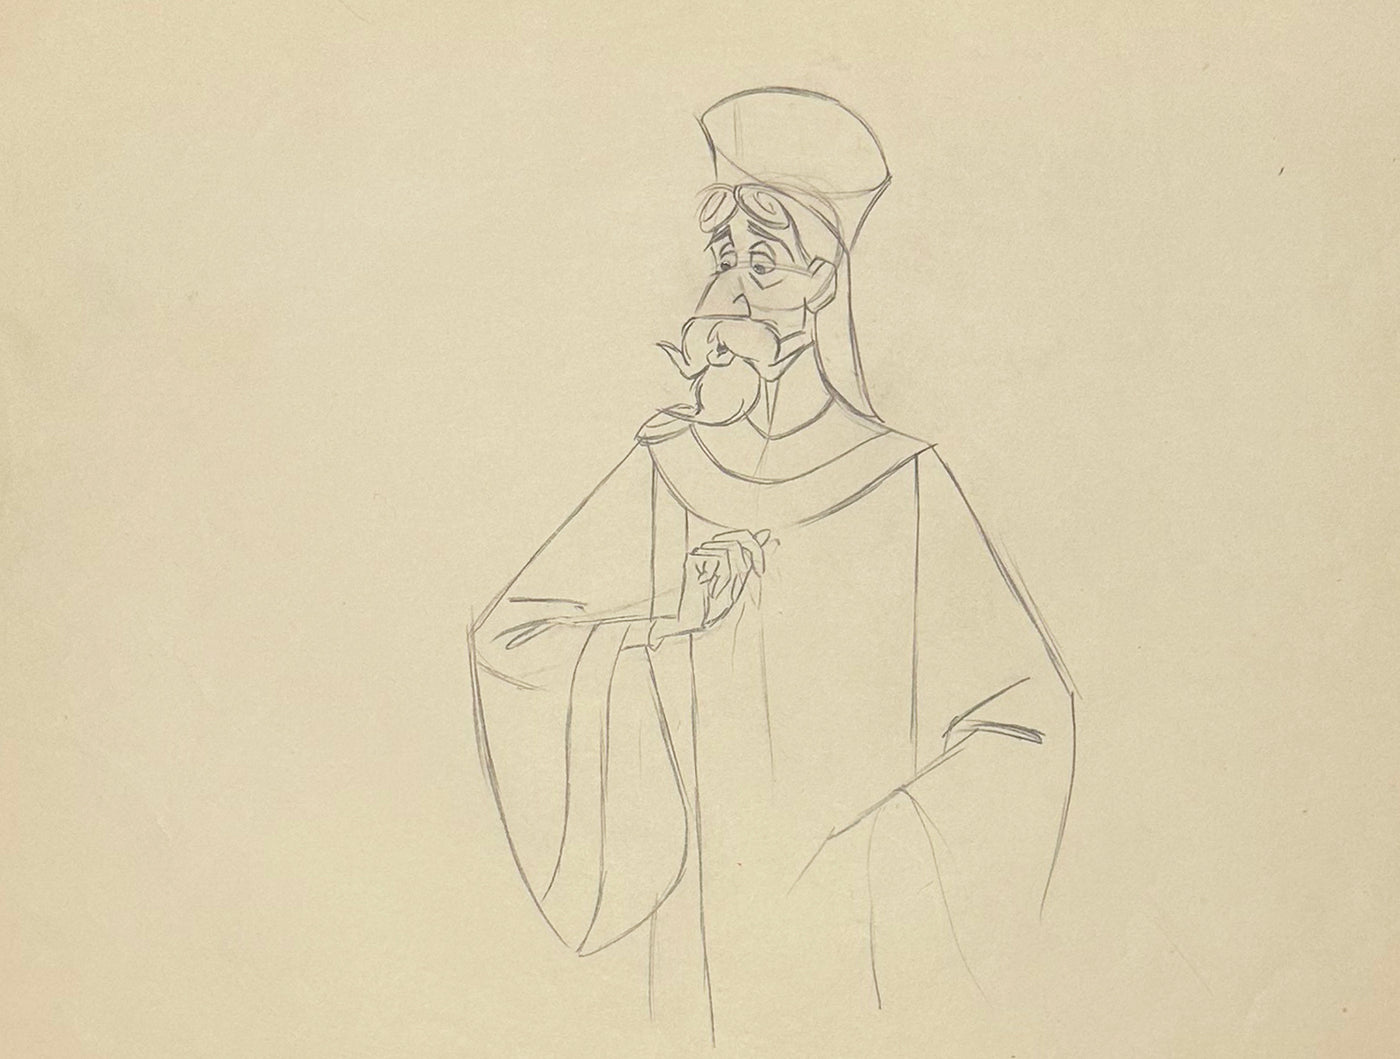 Original Walt Disney Production Drawing from Sleeping Beauty featuring King Stefan